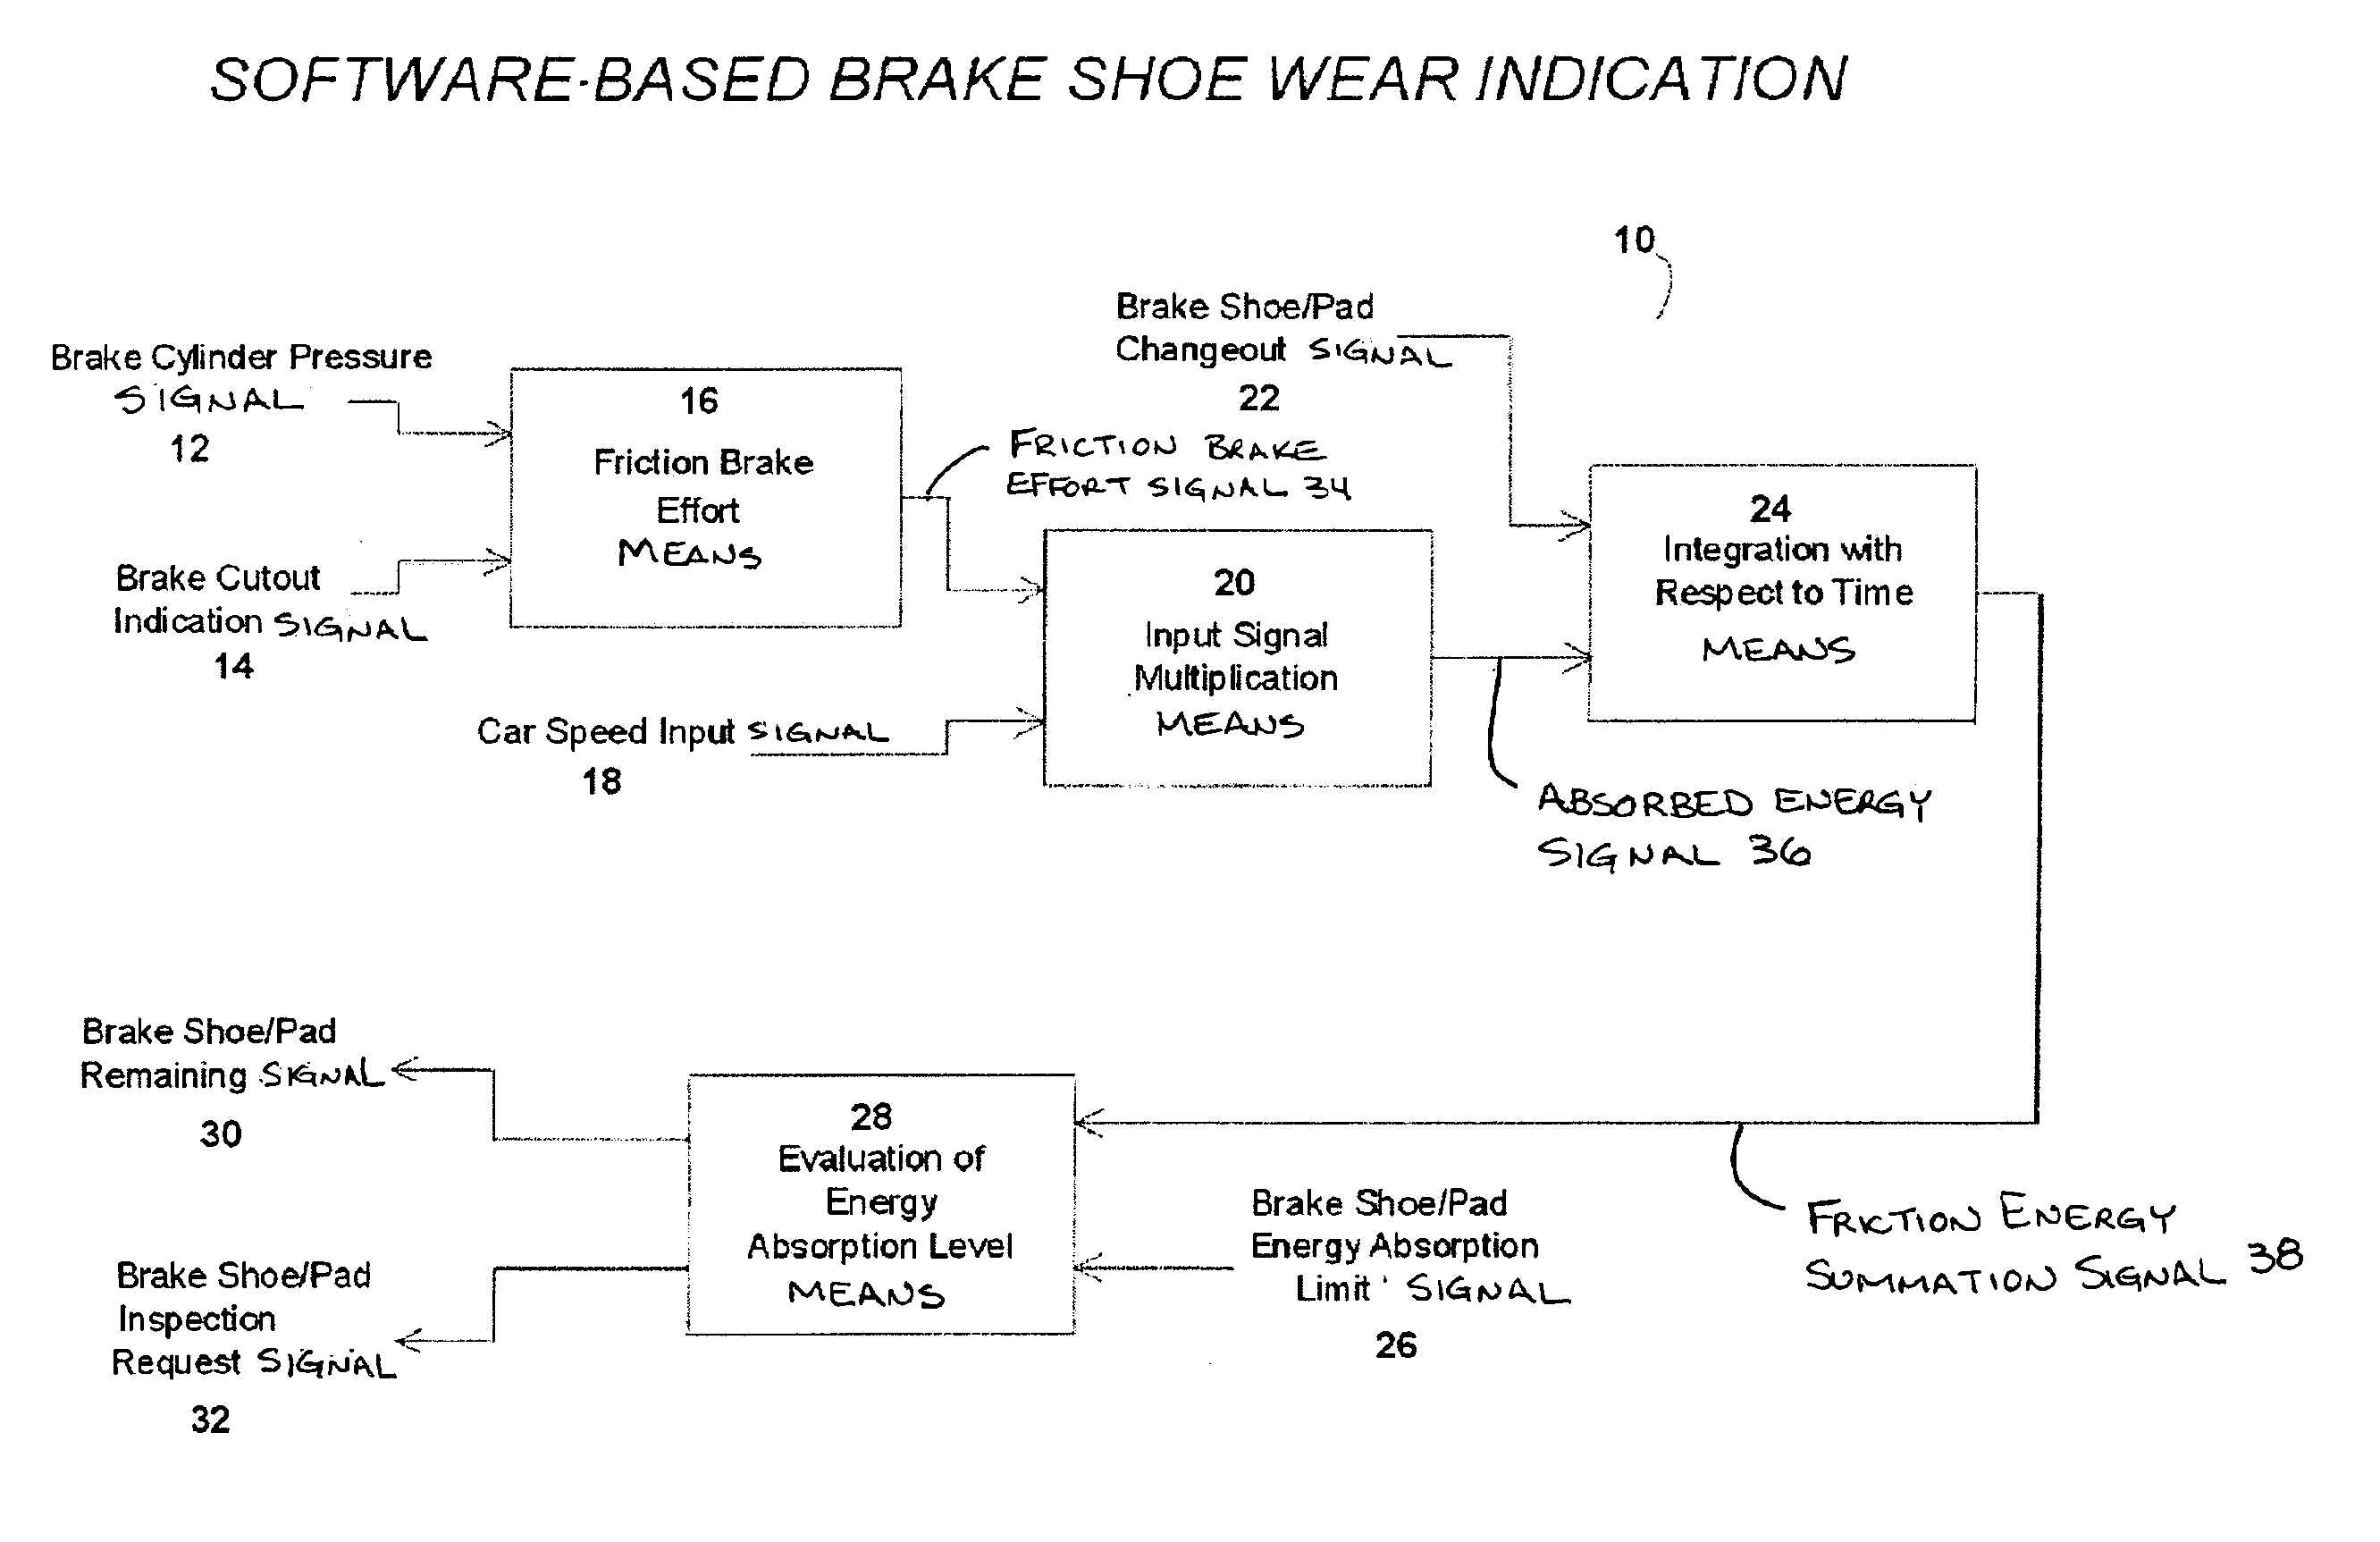 Software based brake shoe wear determination